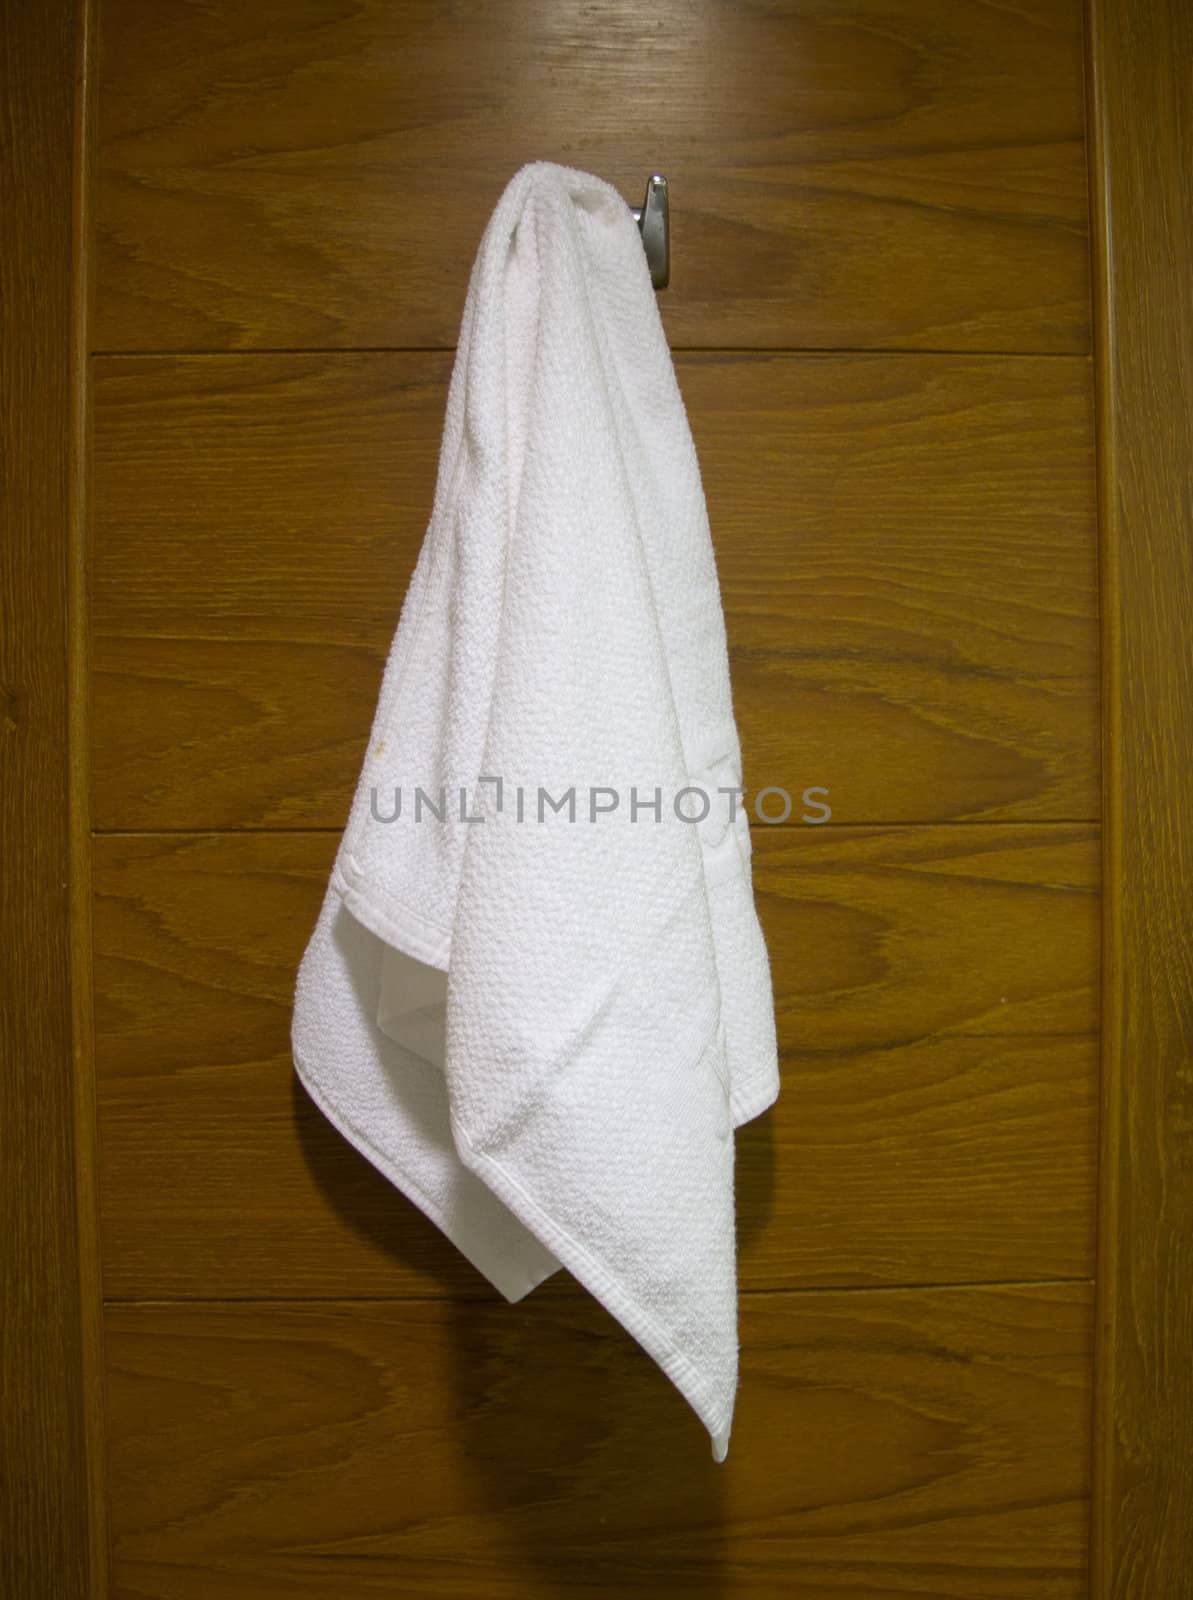 a small towel in bathroom